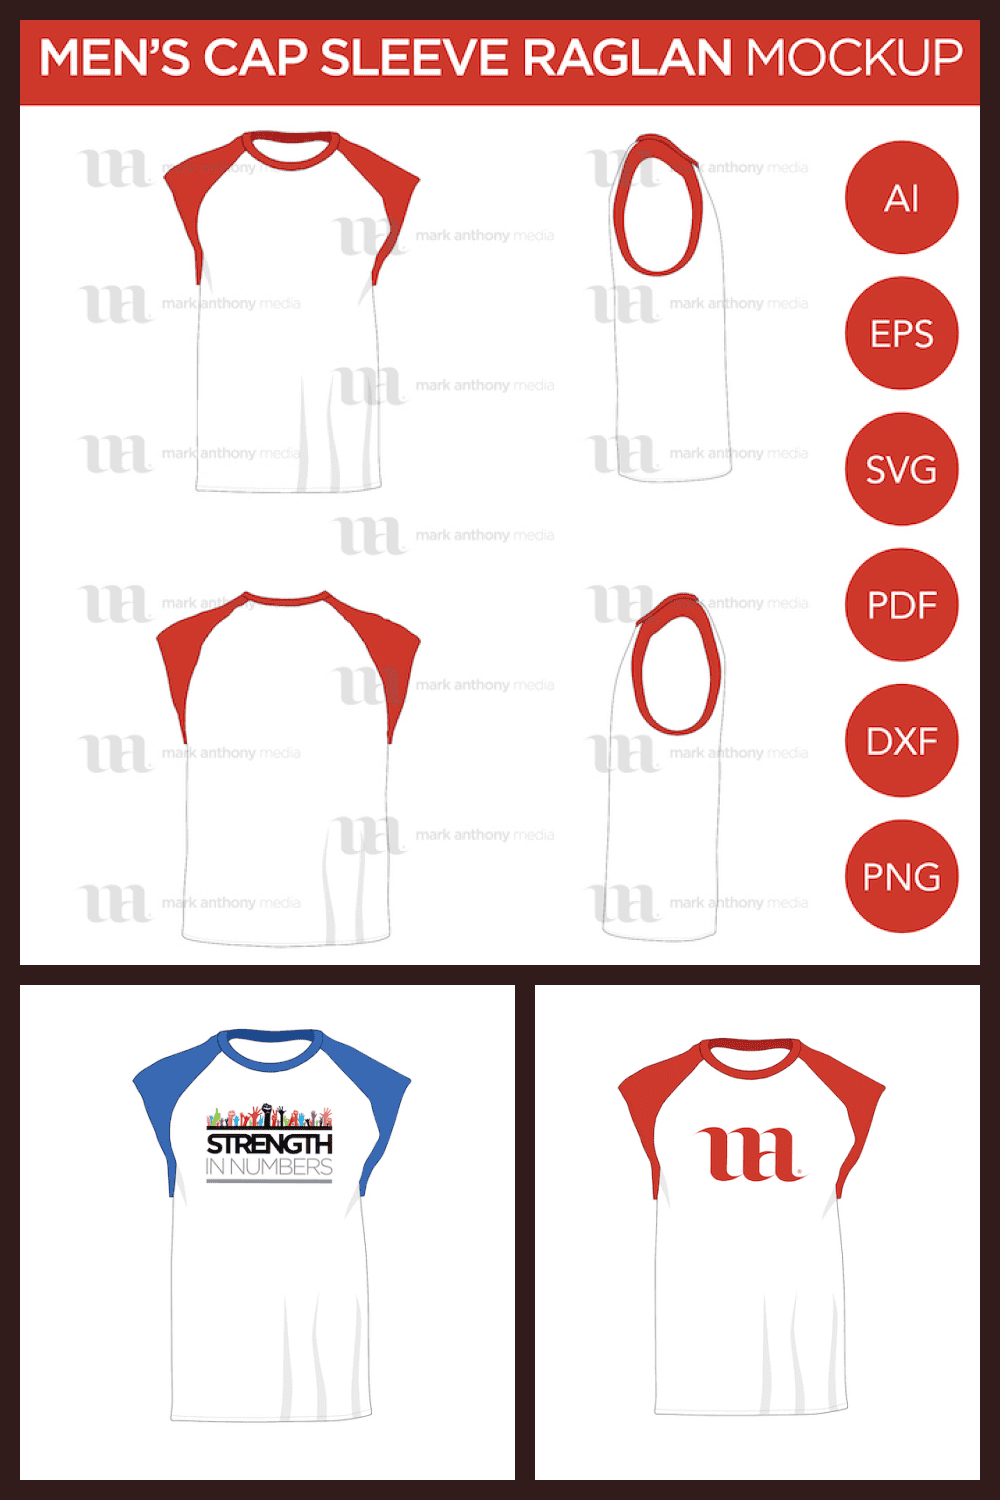 Raglan Men's Cap Sleeve/Sleeveless Shirt - Vector Mockup Template - MasterBundles - Pinterest Collage Image.